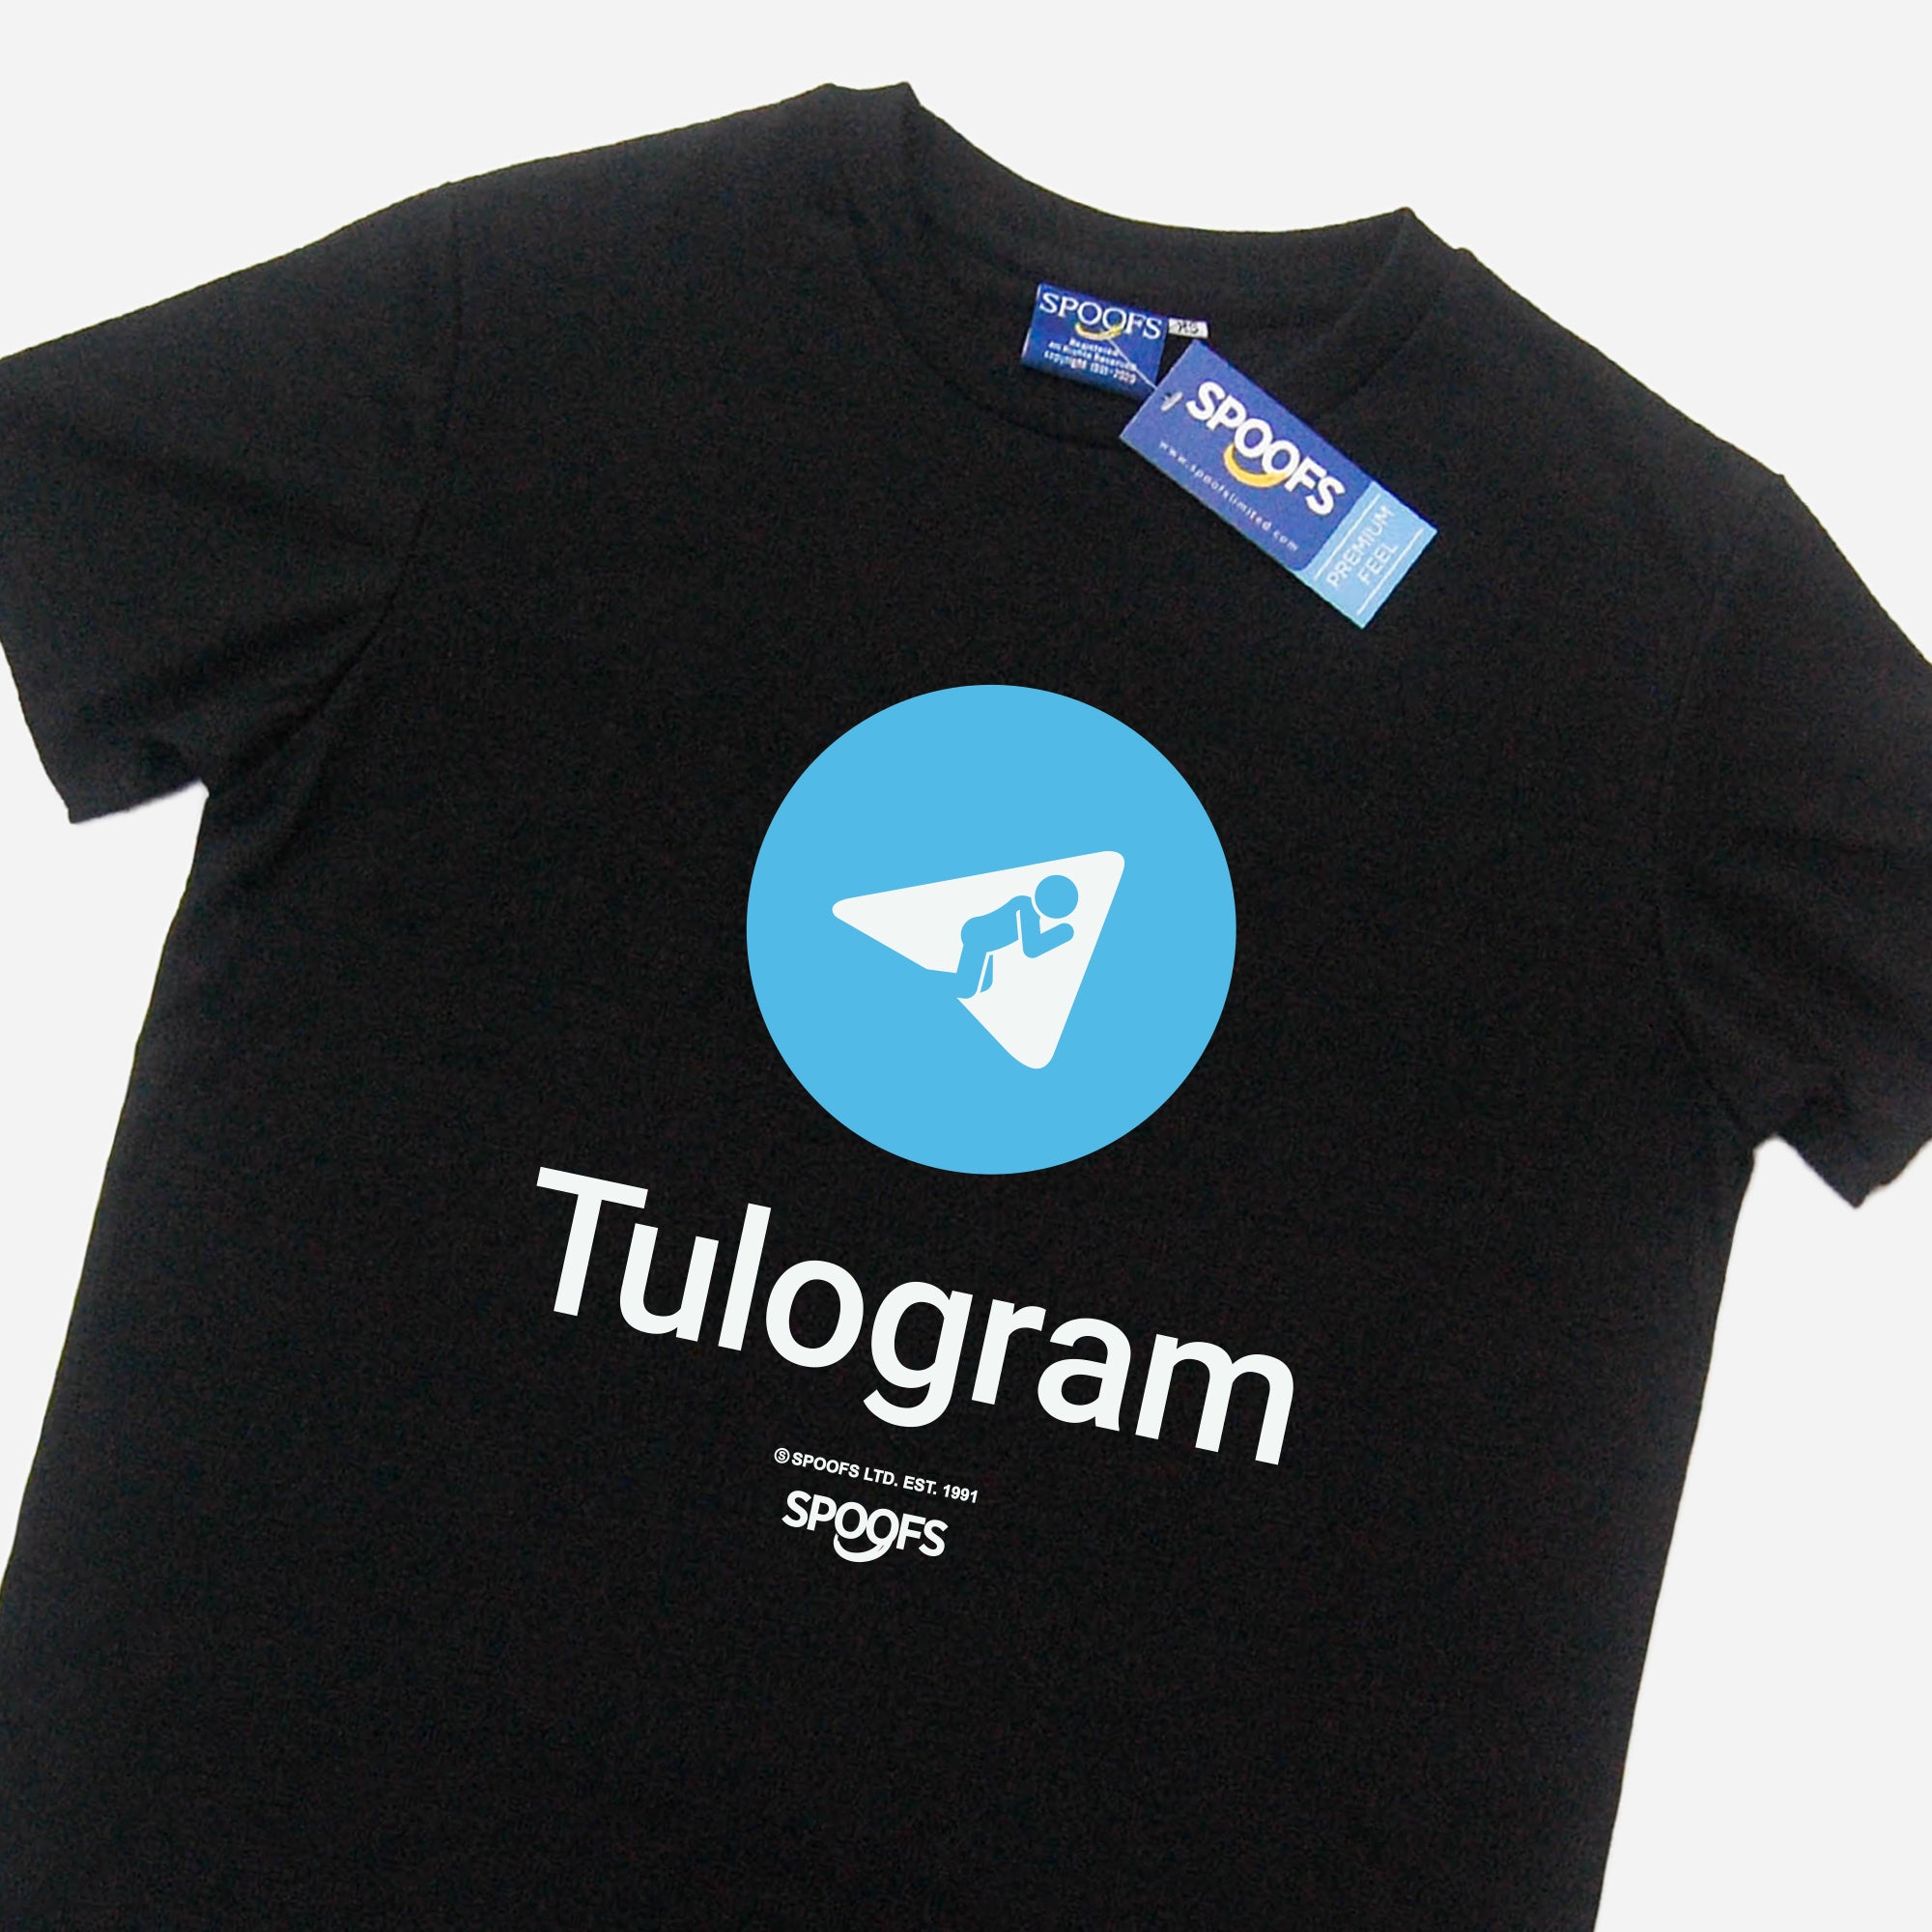 Tulogram (Black)